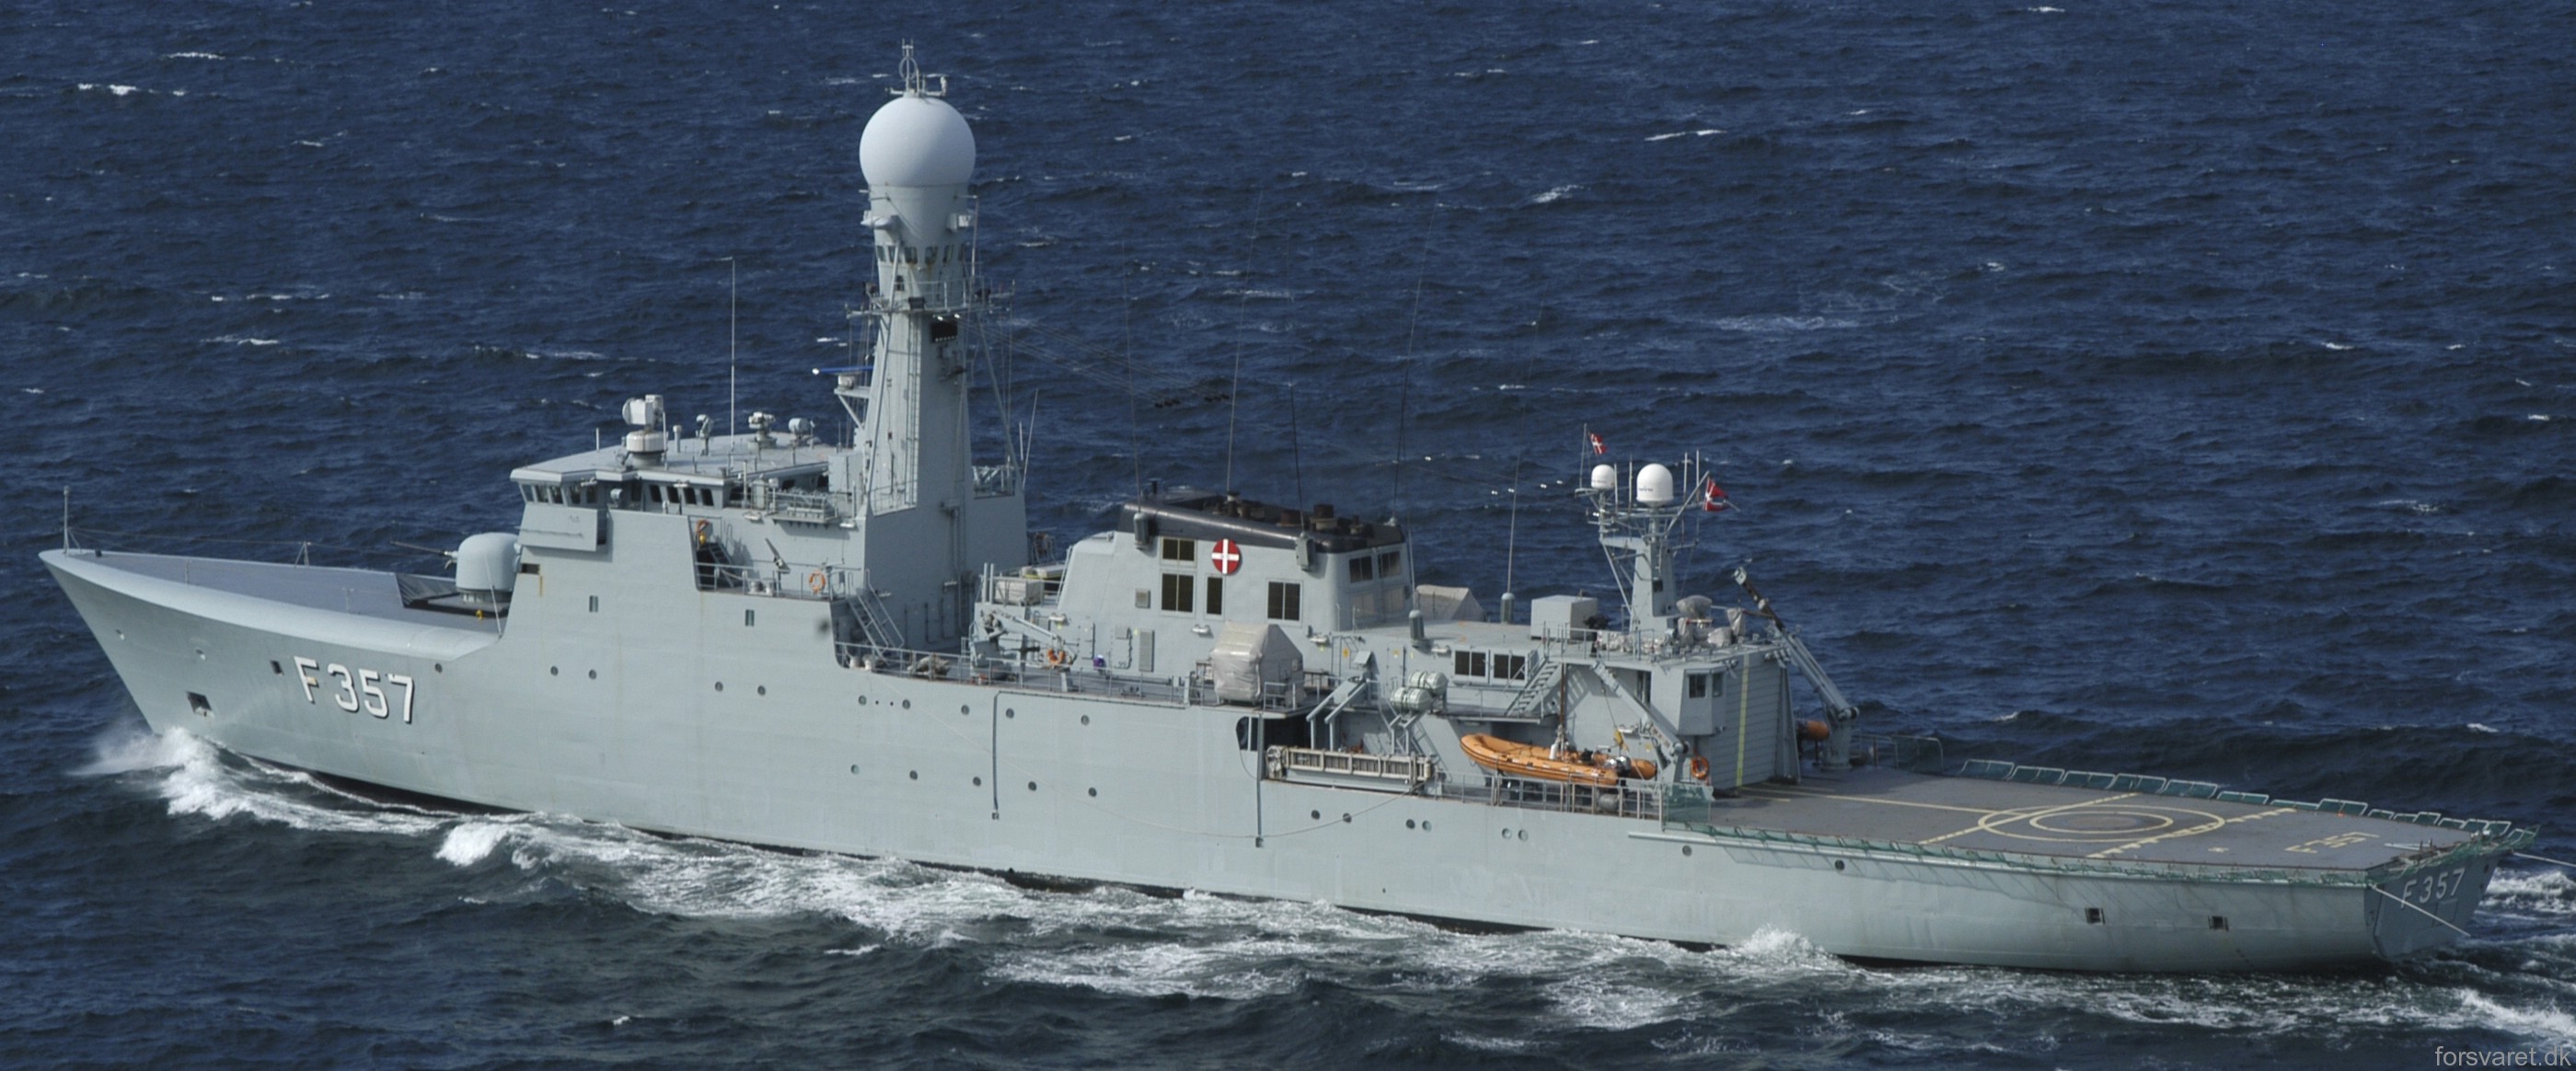 f-357 hdms thetis ocean patrol frigate royal danish navy kongelige danske marine inspektionsskibet 51